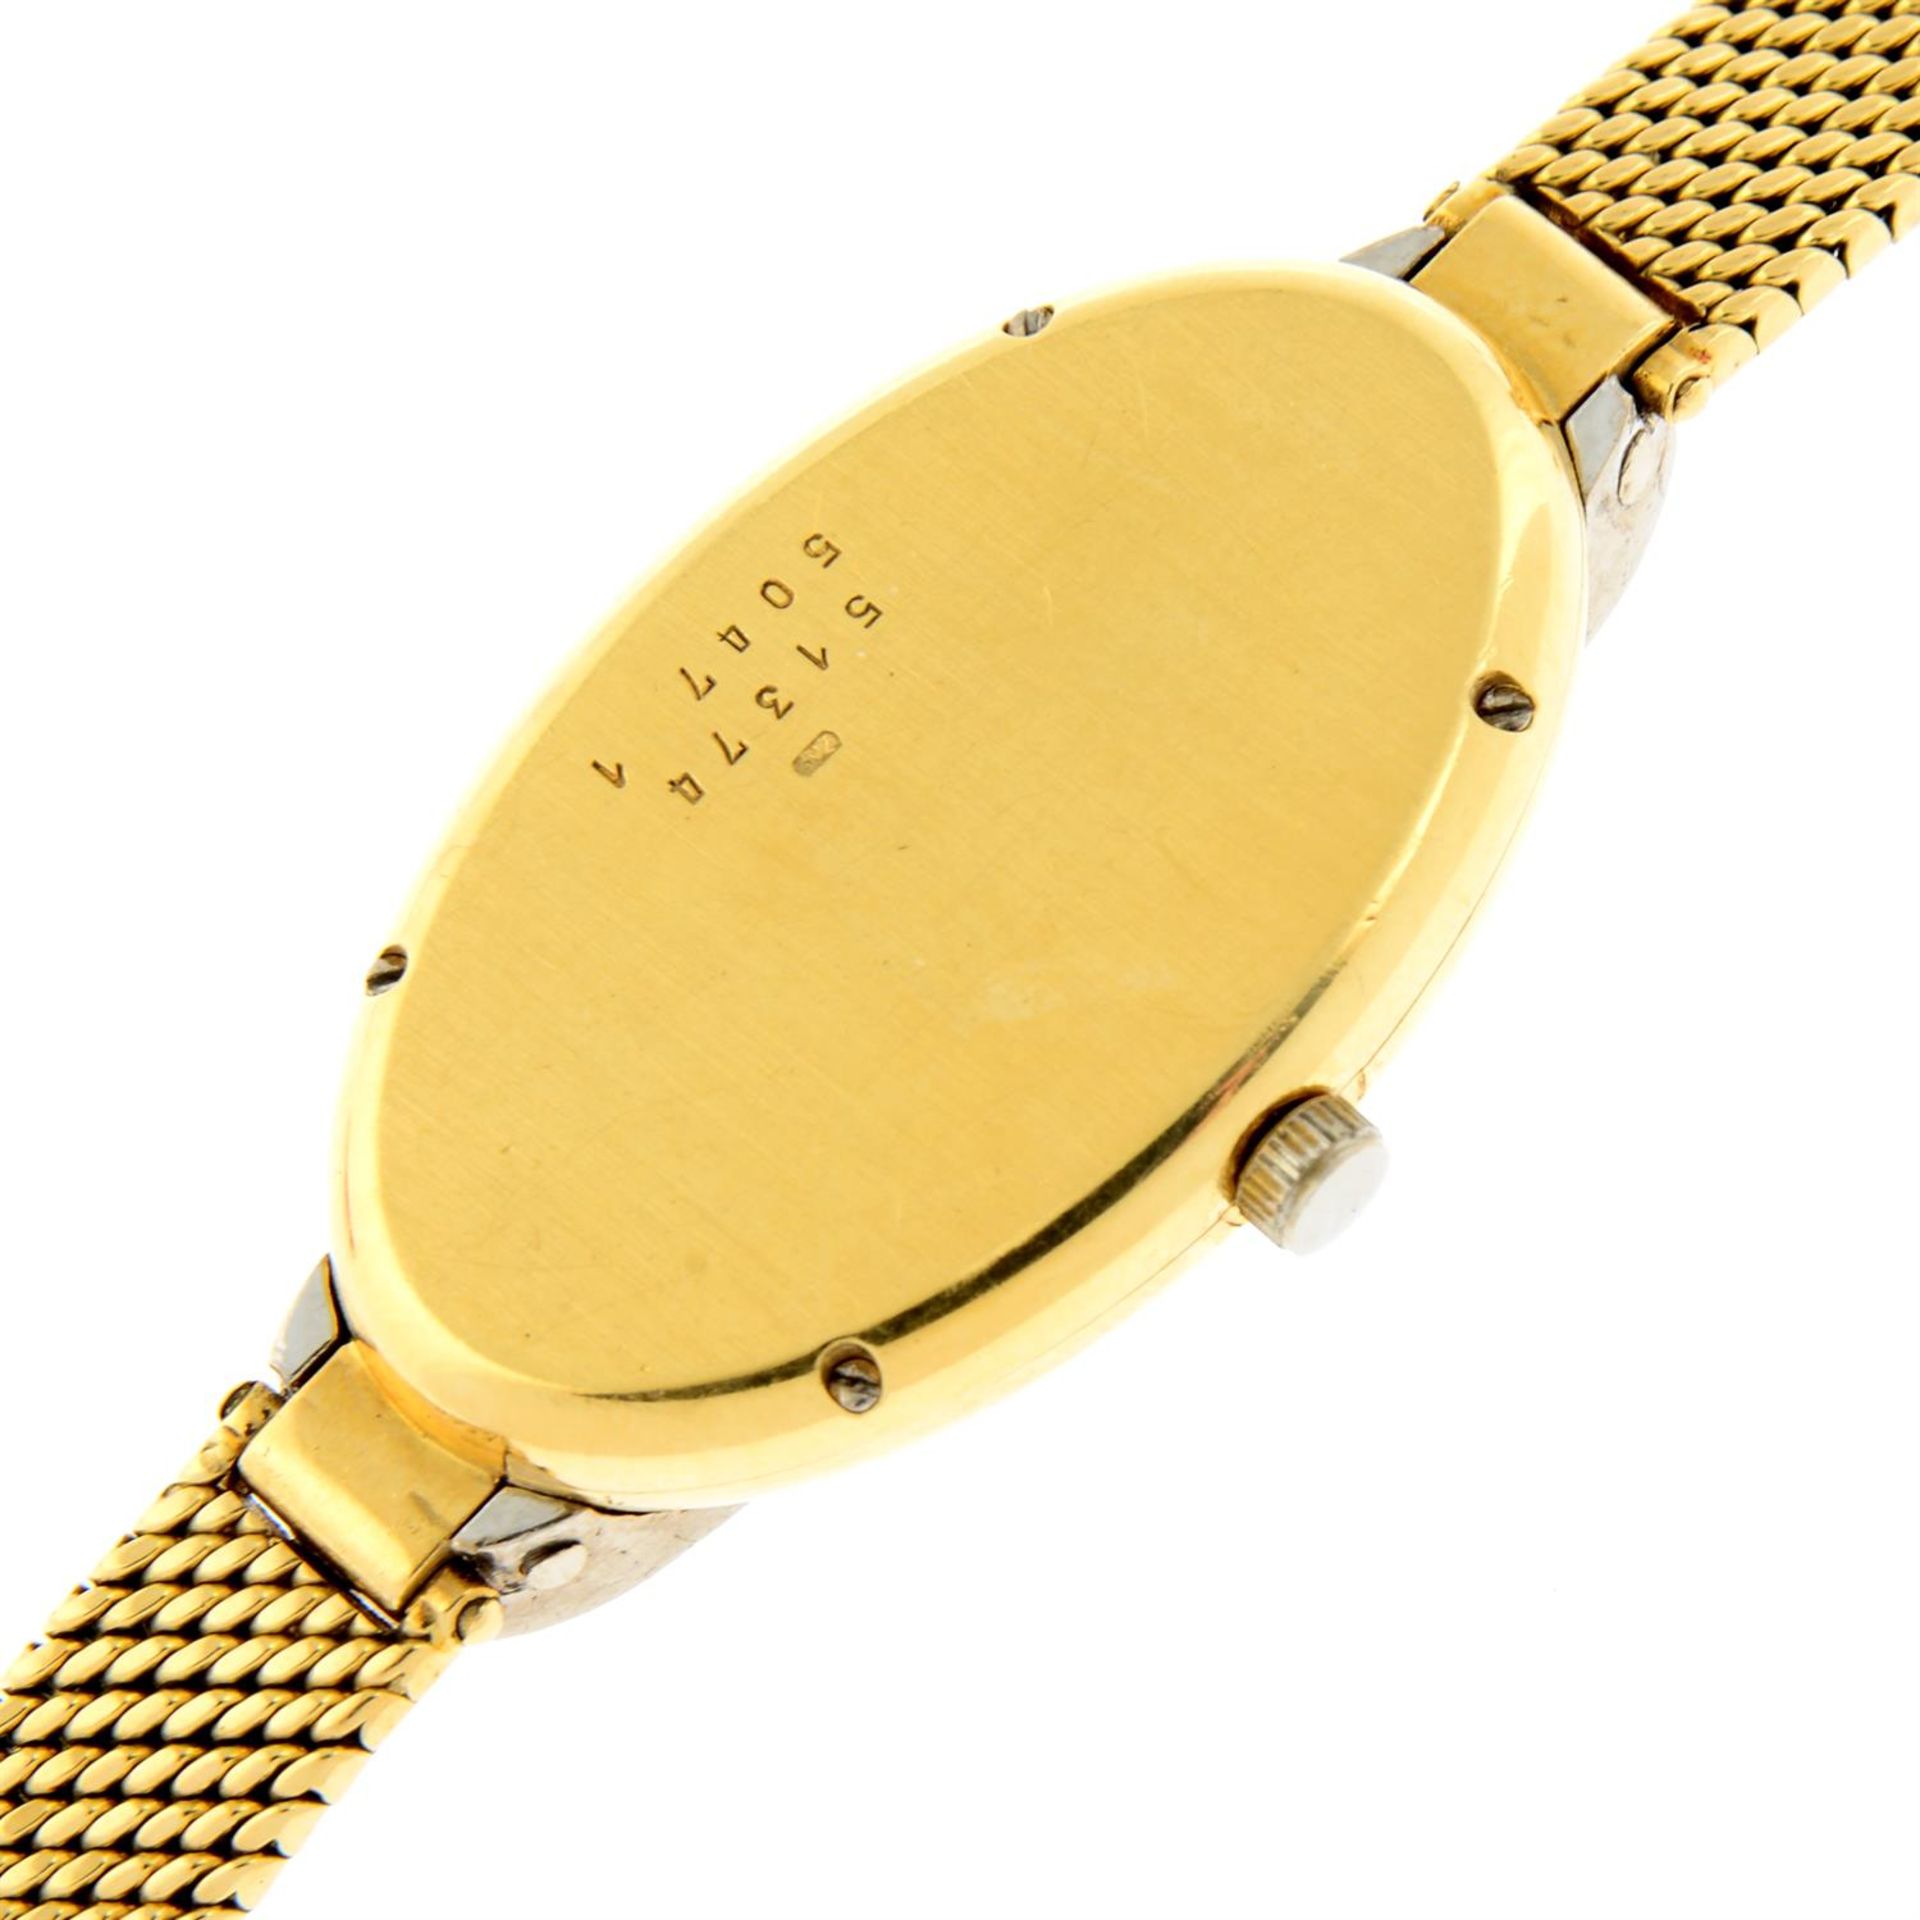 CHOPARD - a diamond set yellow metal bracelet watch, 22mm. - Image 4 of 5